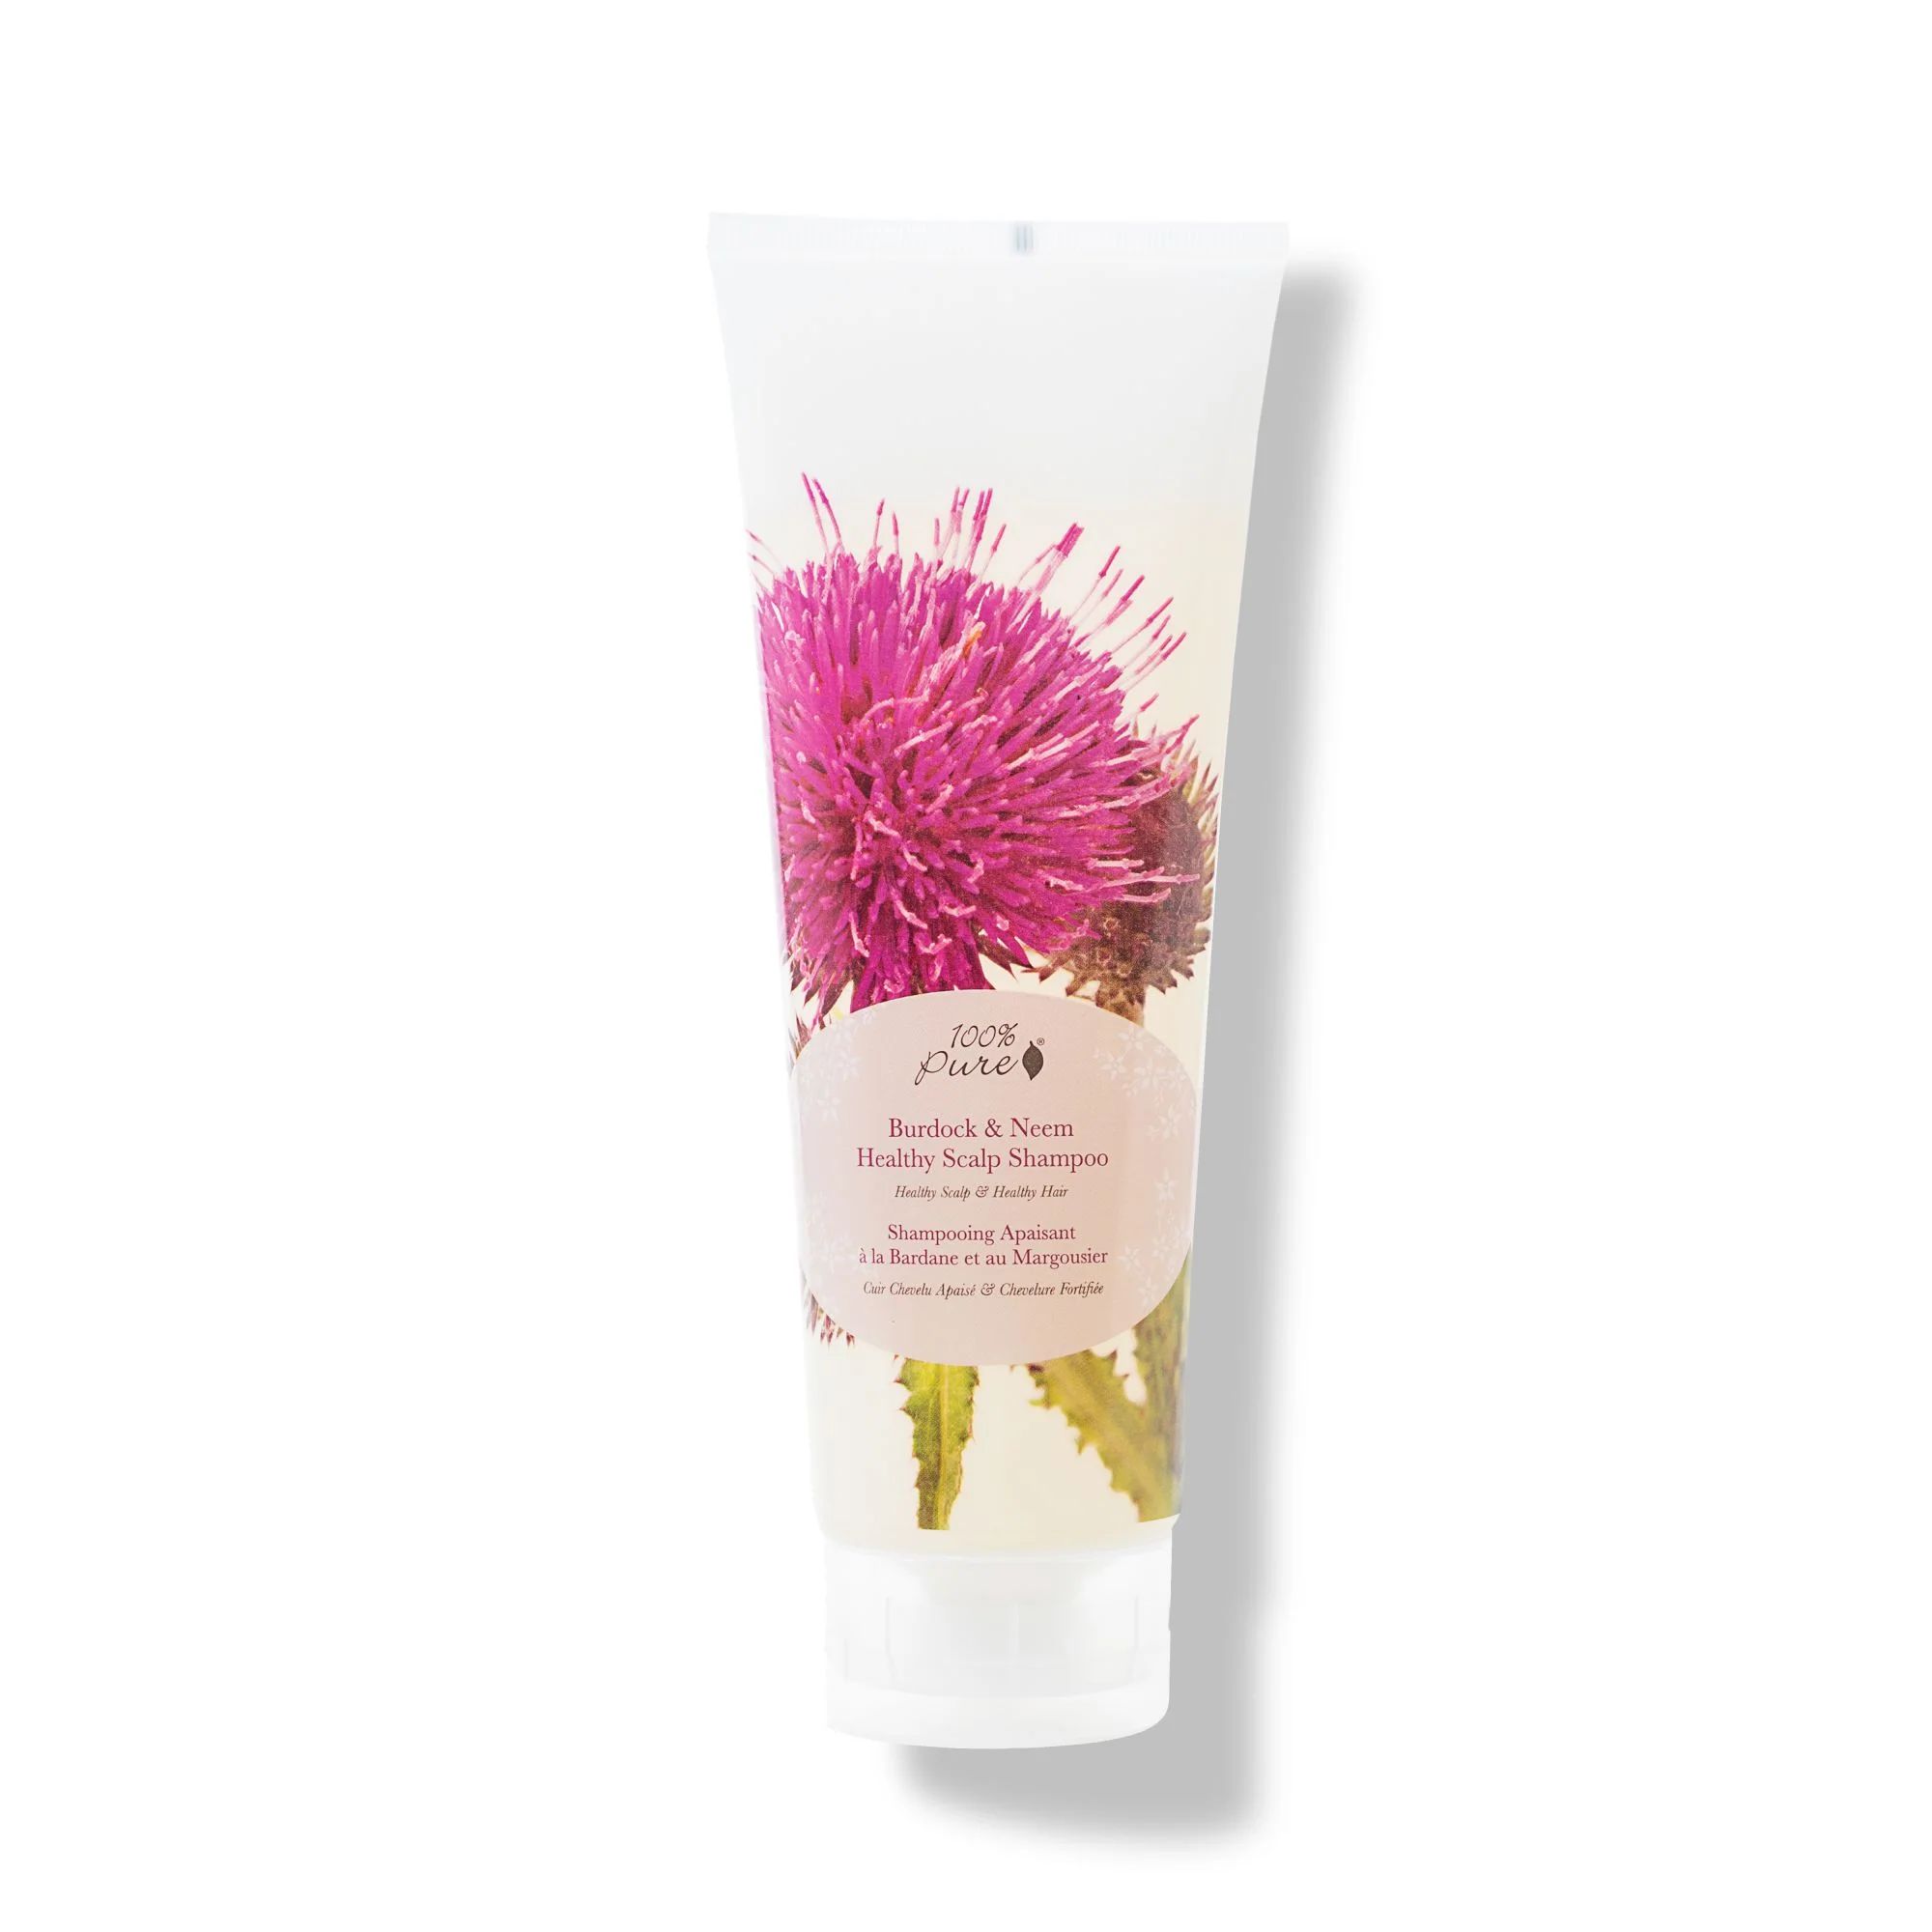 Burdock and Neem Healthy Scalp Shampoo - 8 oz | 100% PURE